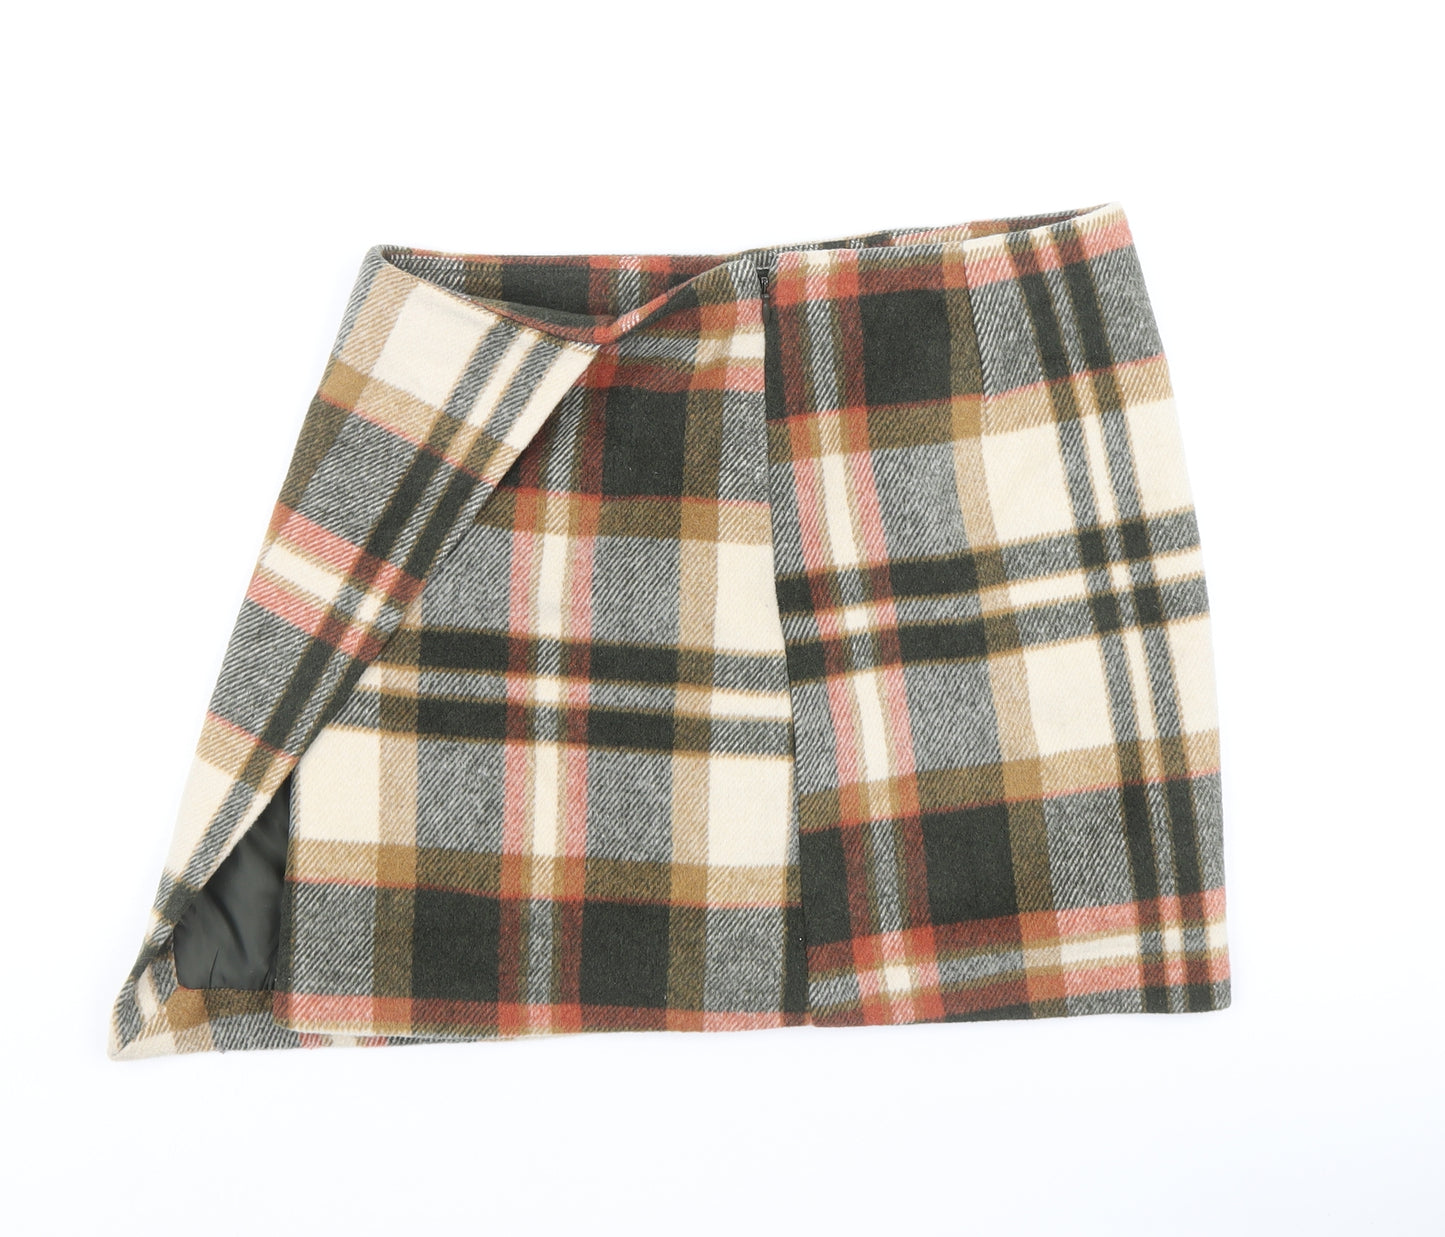 NEXT Womens Multicoloured Plaid Polyester Mini Skirt Size 10 Zip